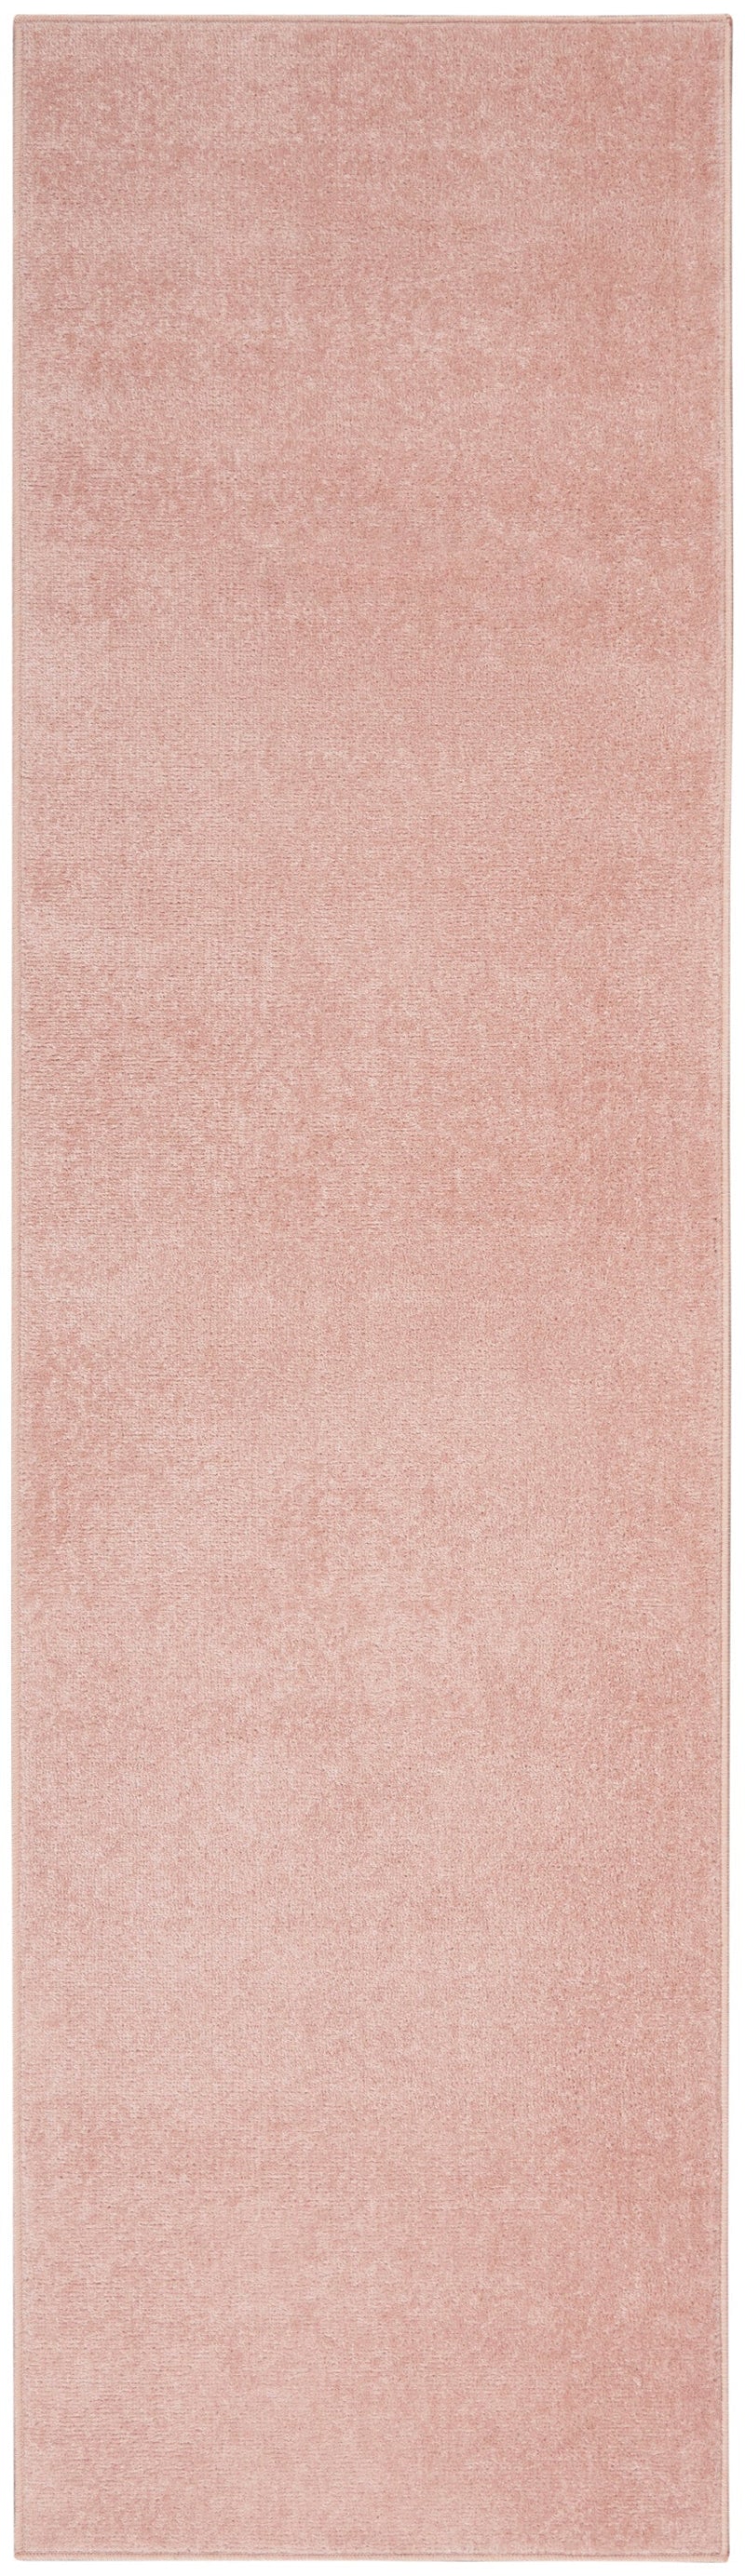 media image for nourison essentials pink rug by nourison 99446824776 redo 4 214